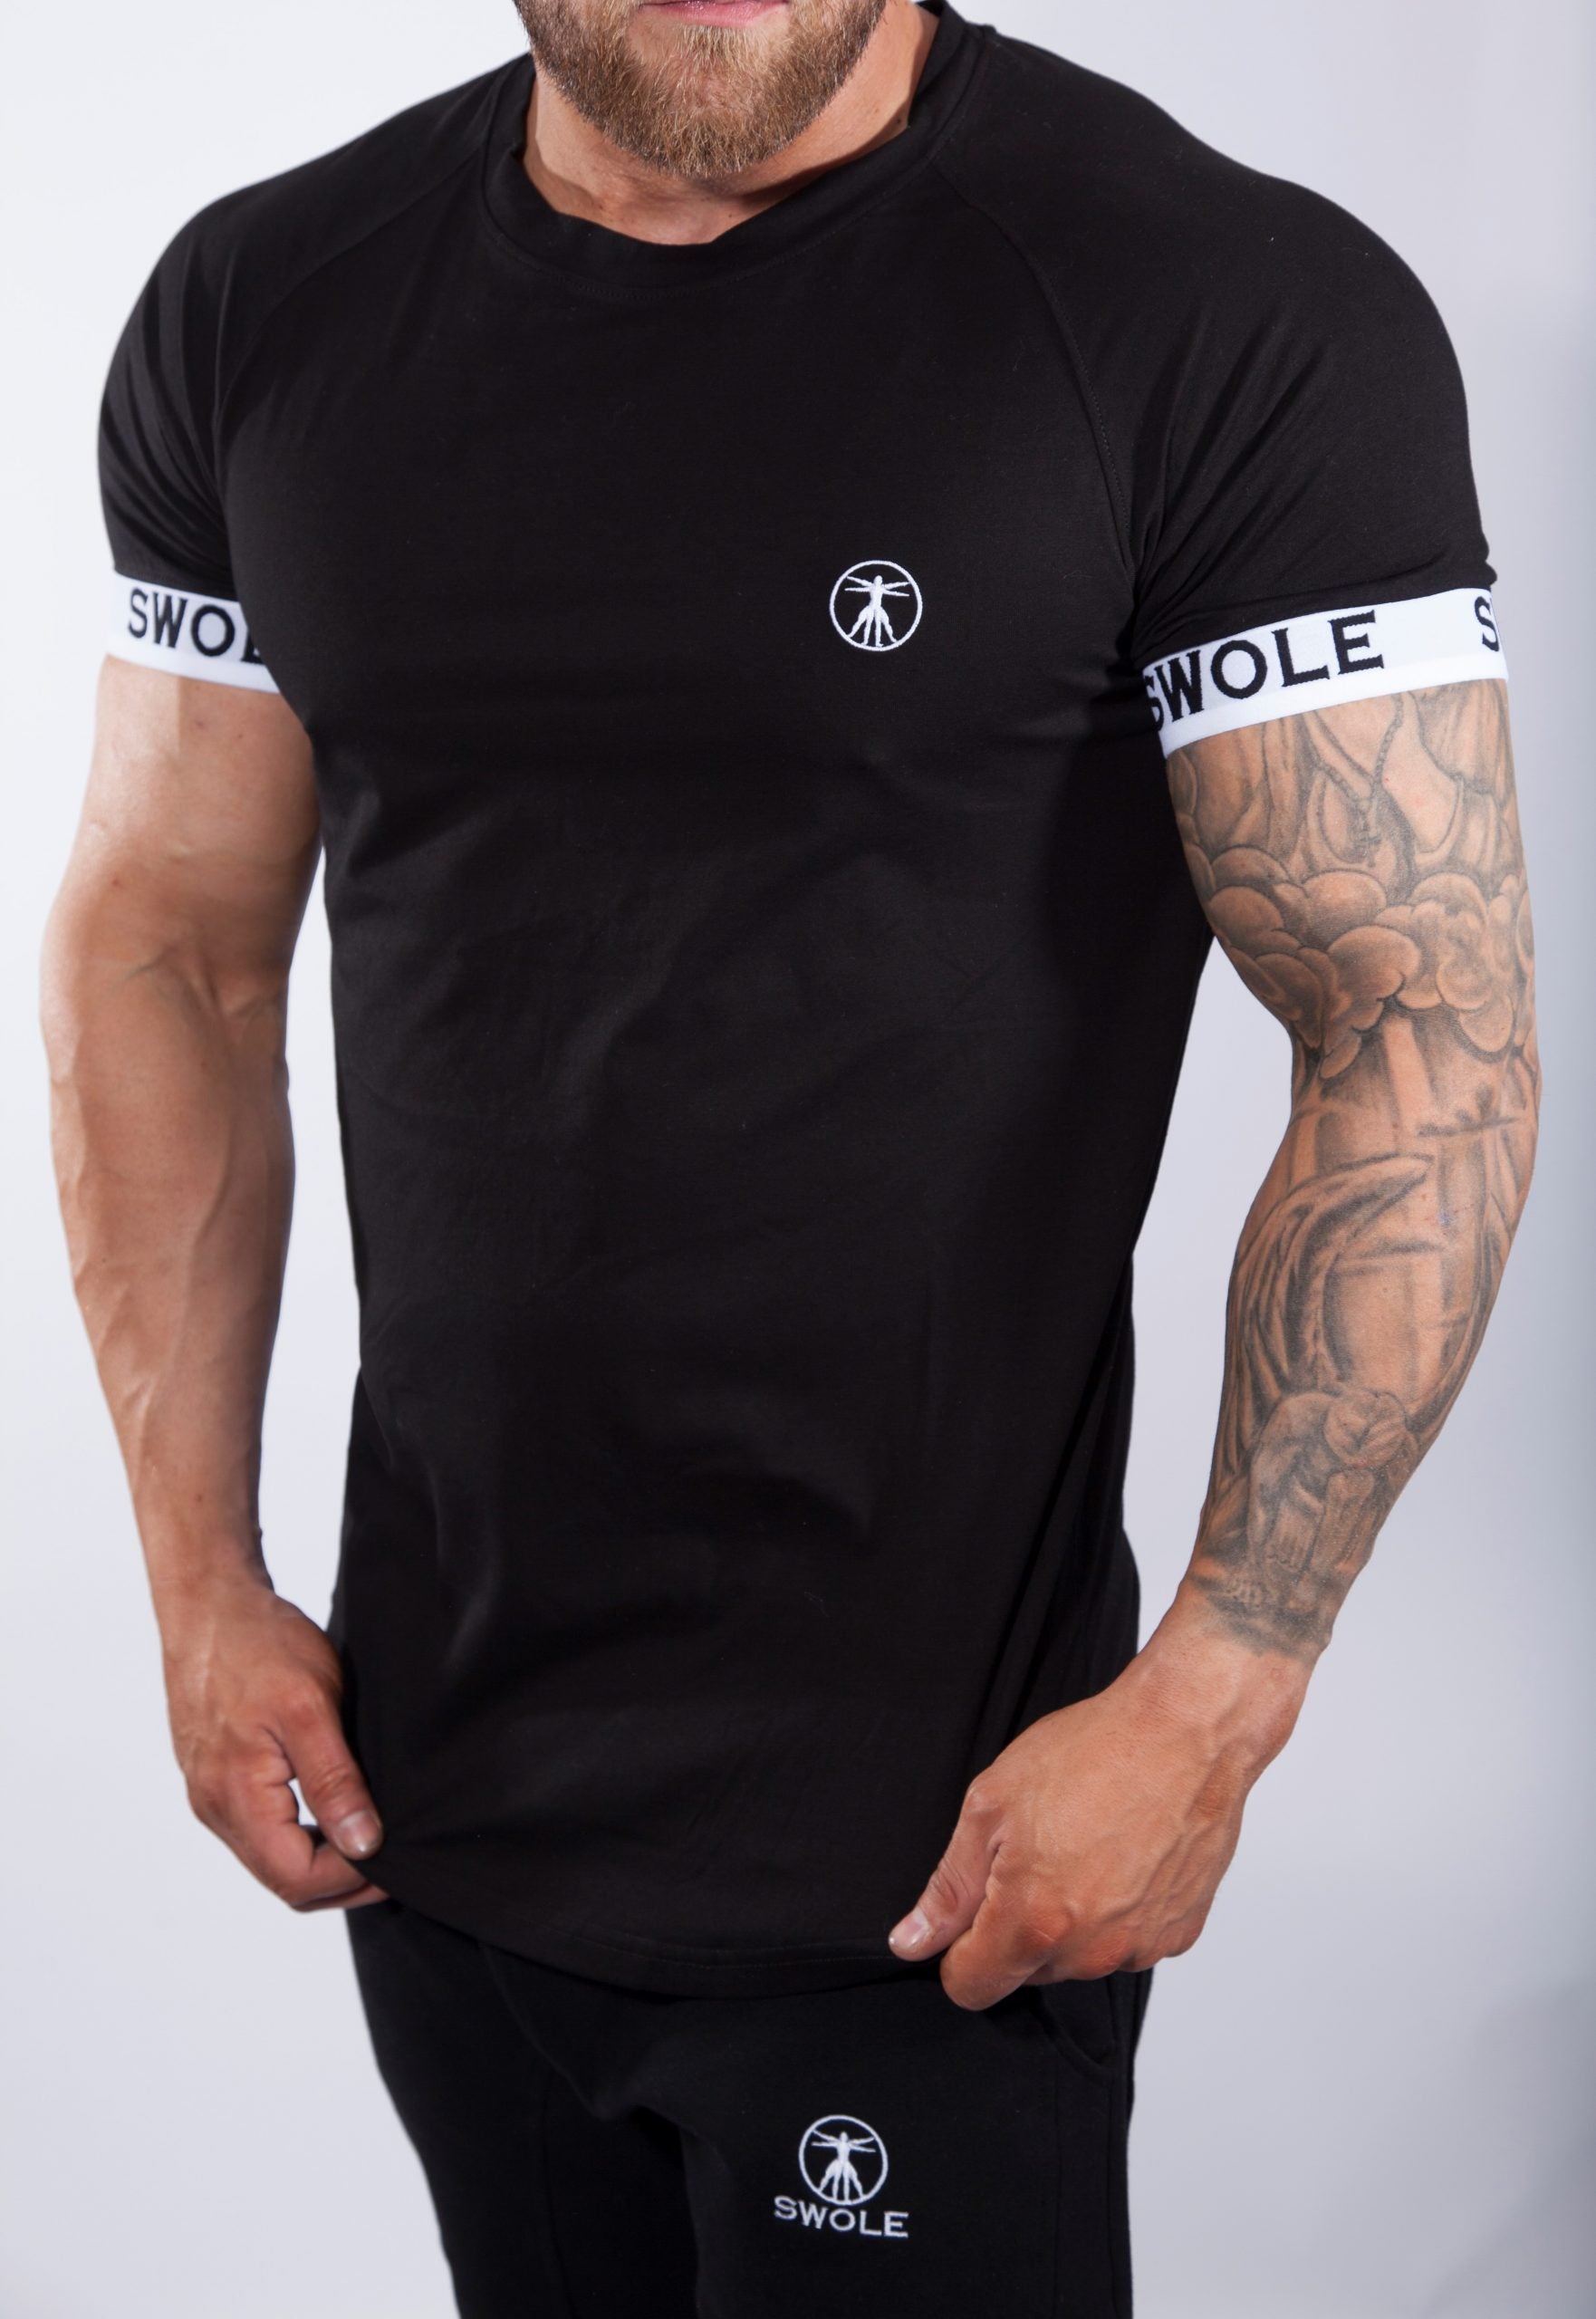 Swole Elastic Arm Raglan T-Shirt in Black/White